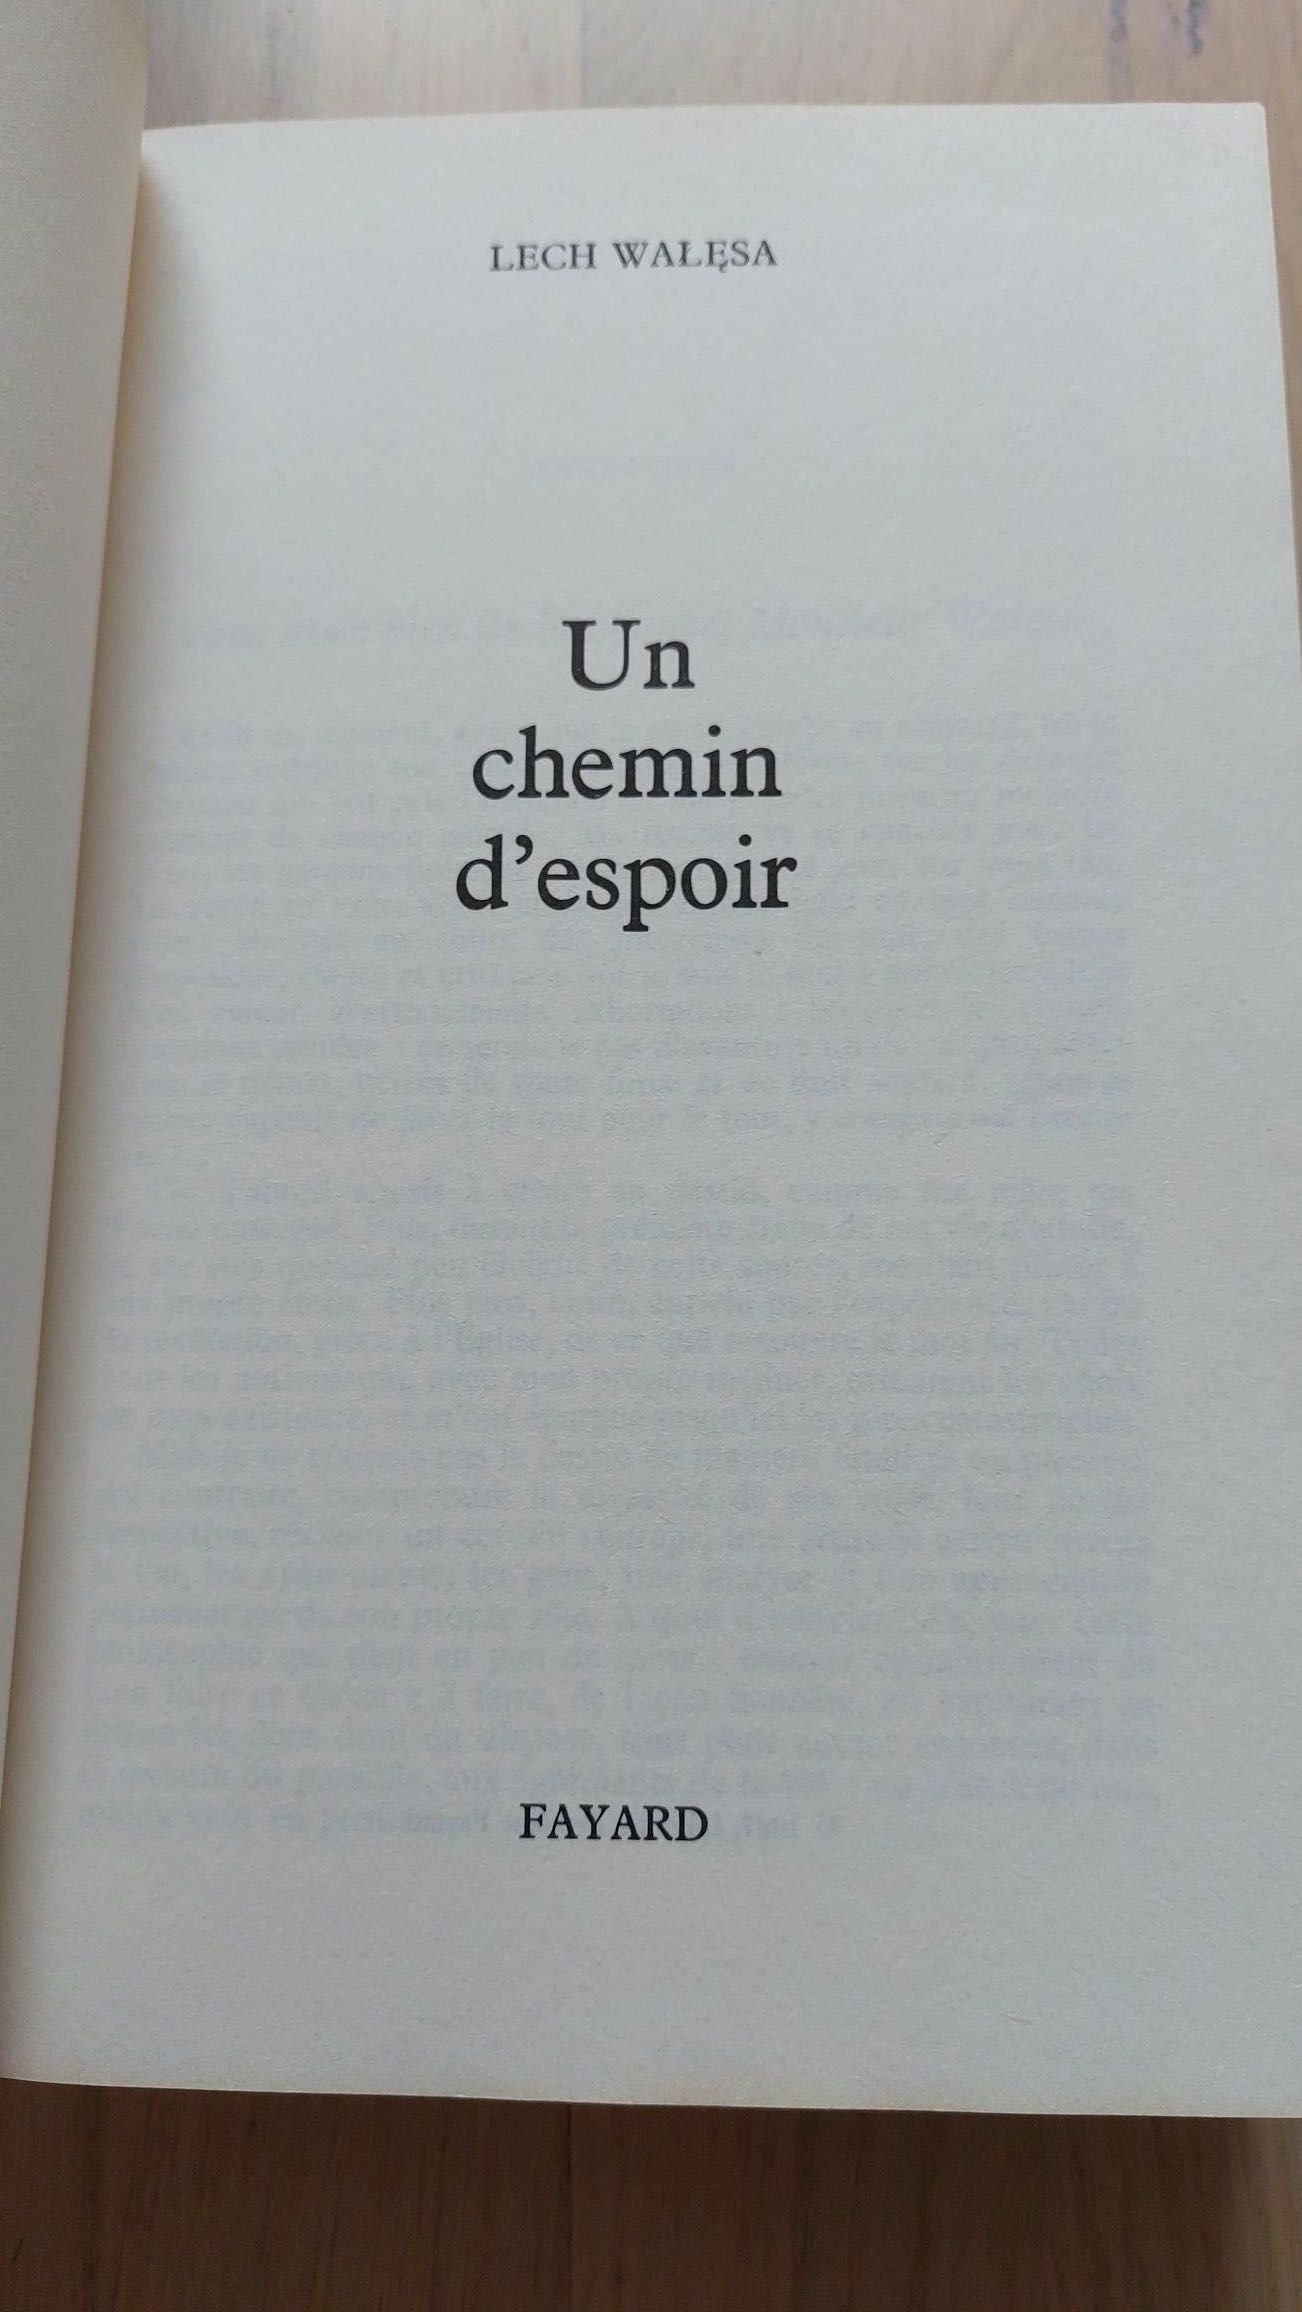 Lech Wałęsa, "Un chemin d'espoir", autobiographie, książka